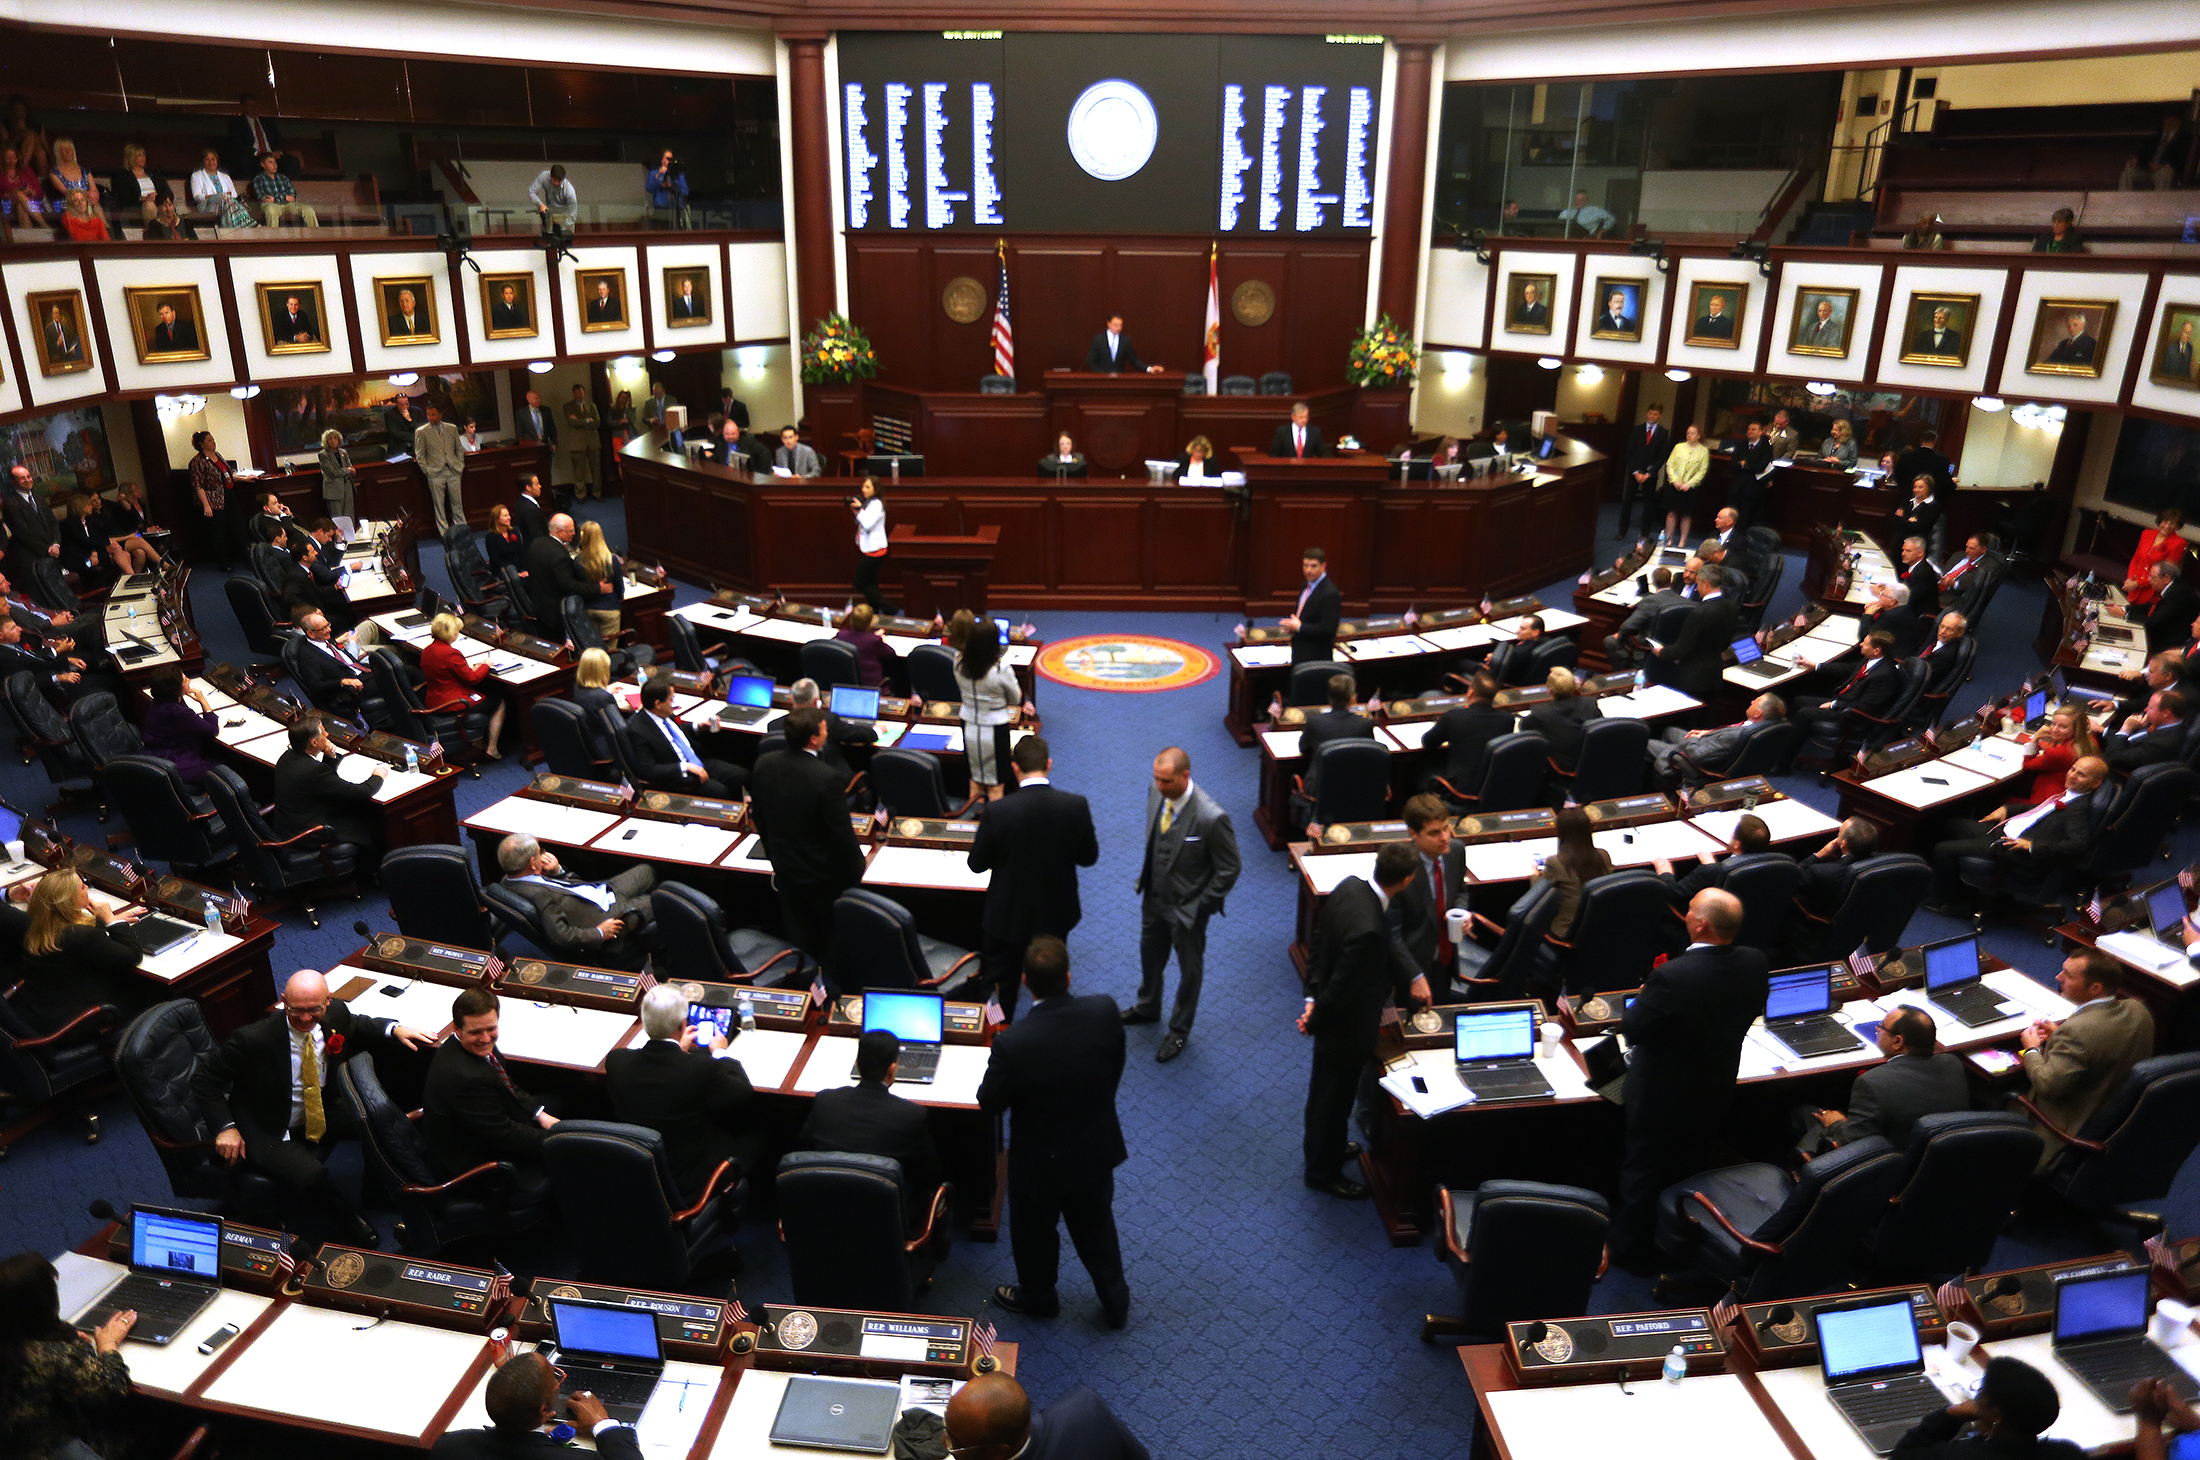 PolitiFact Florida presents Legislature 101 PolitiFact Florida